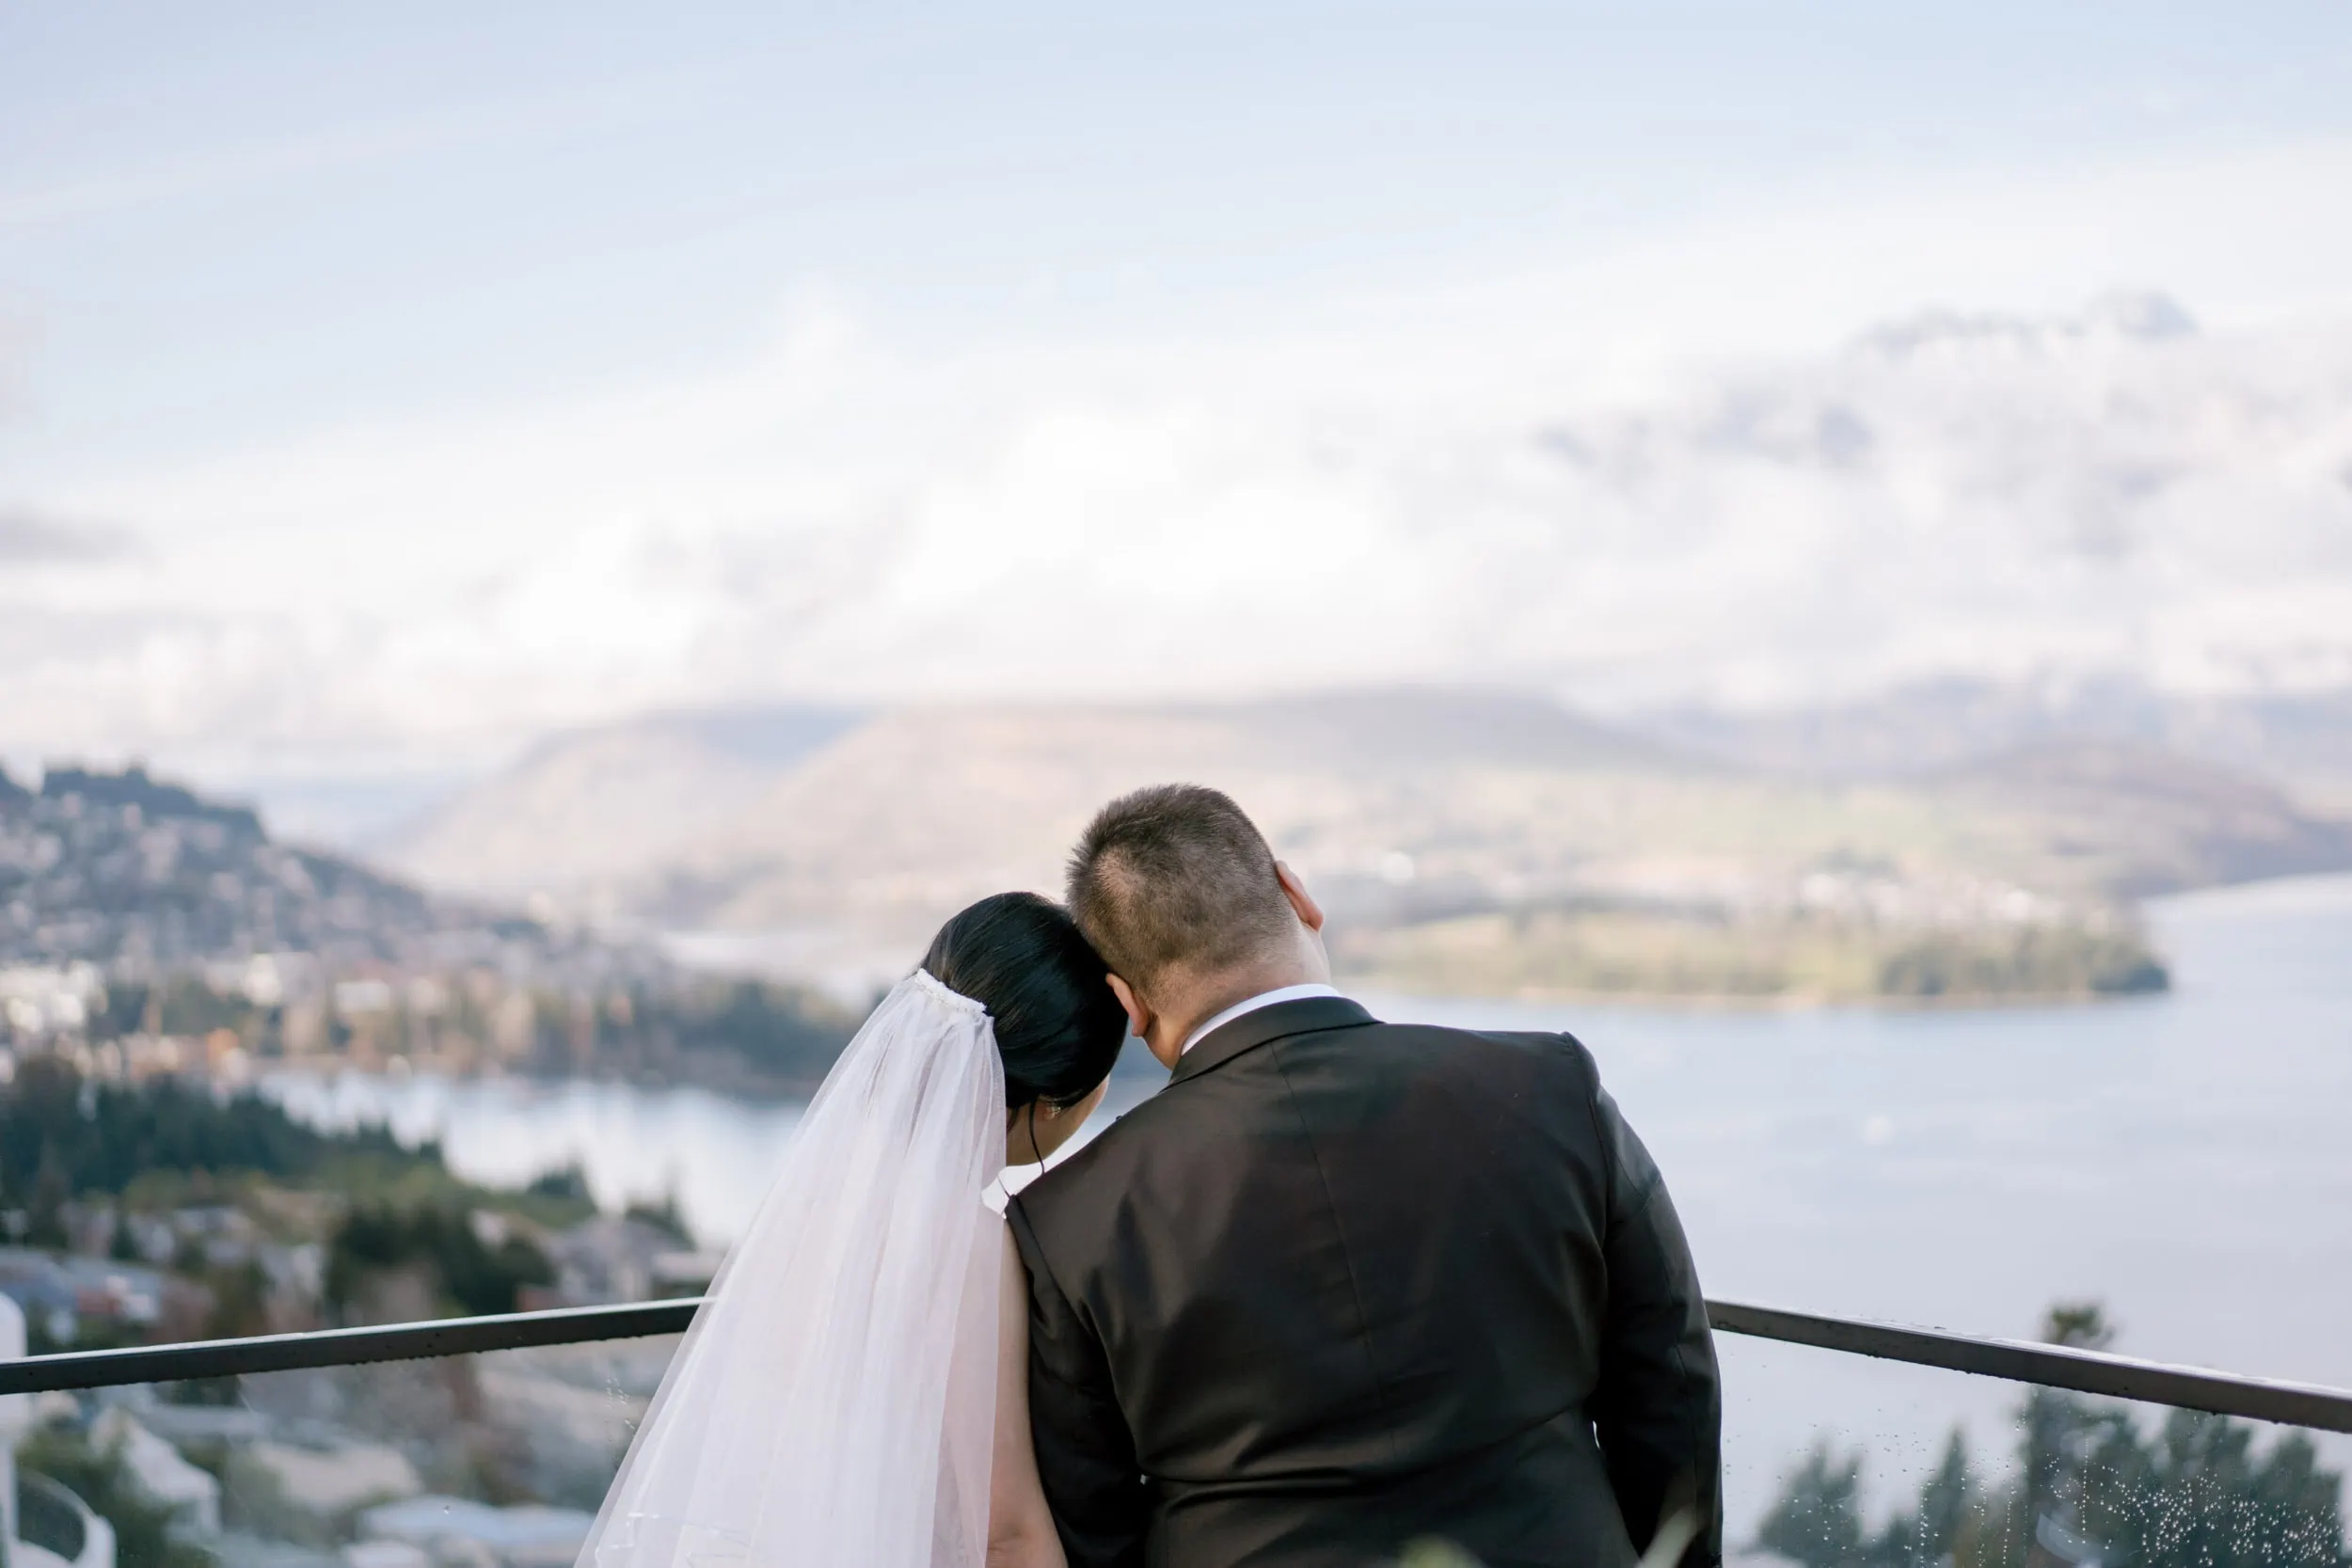 Queenstown New Zealand Elopement Wedding Photographer - Lam and Wendy's wedding at Kamana Lakehouse, overlooking Lake Wanaka.